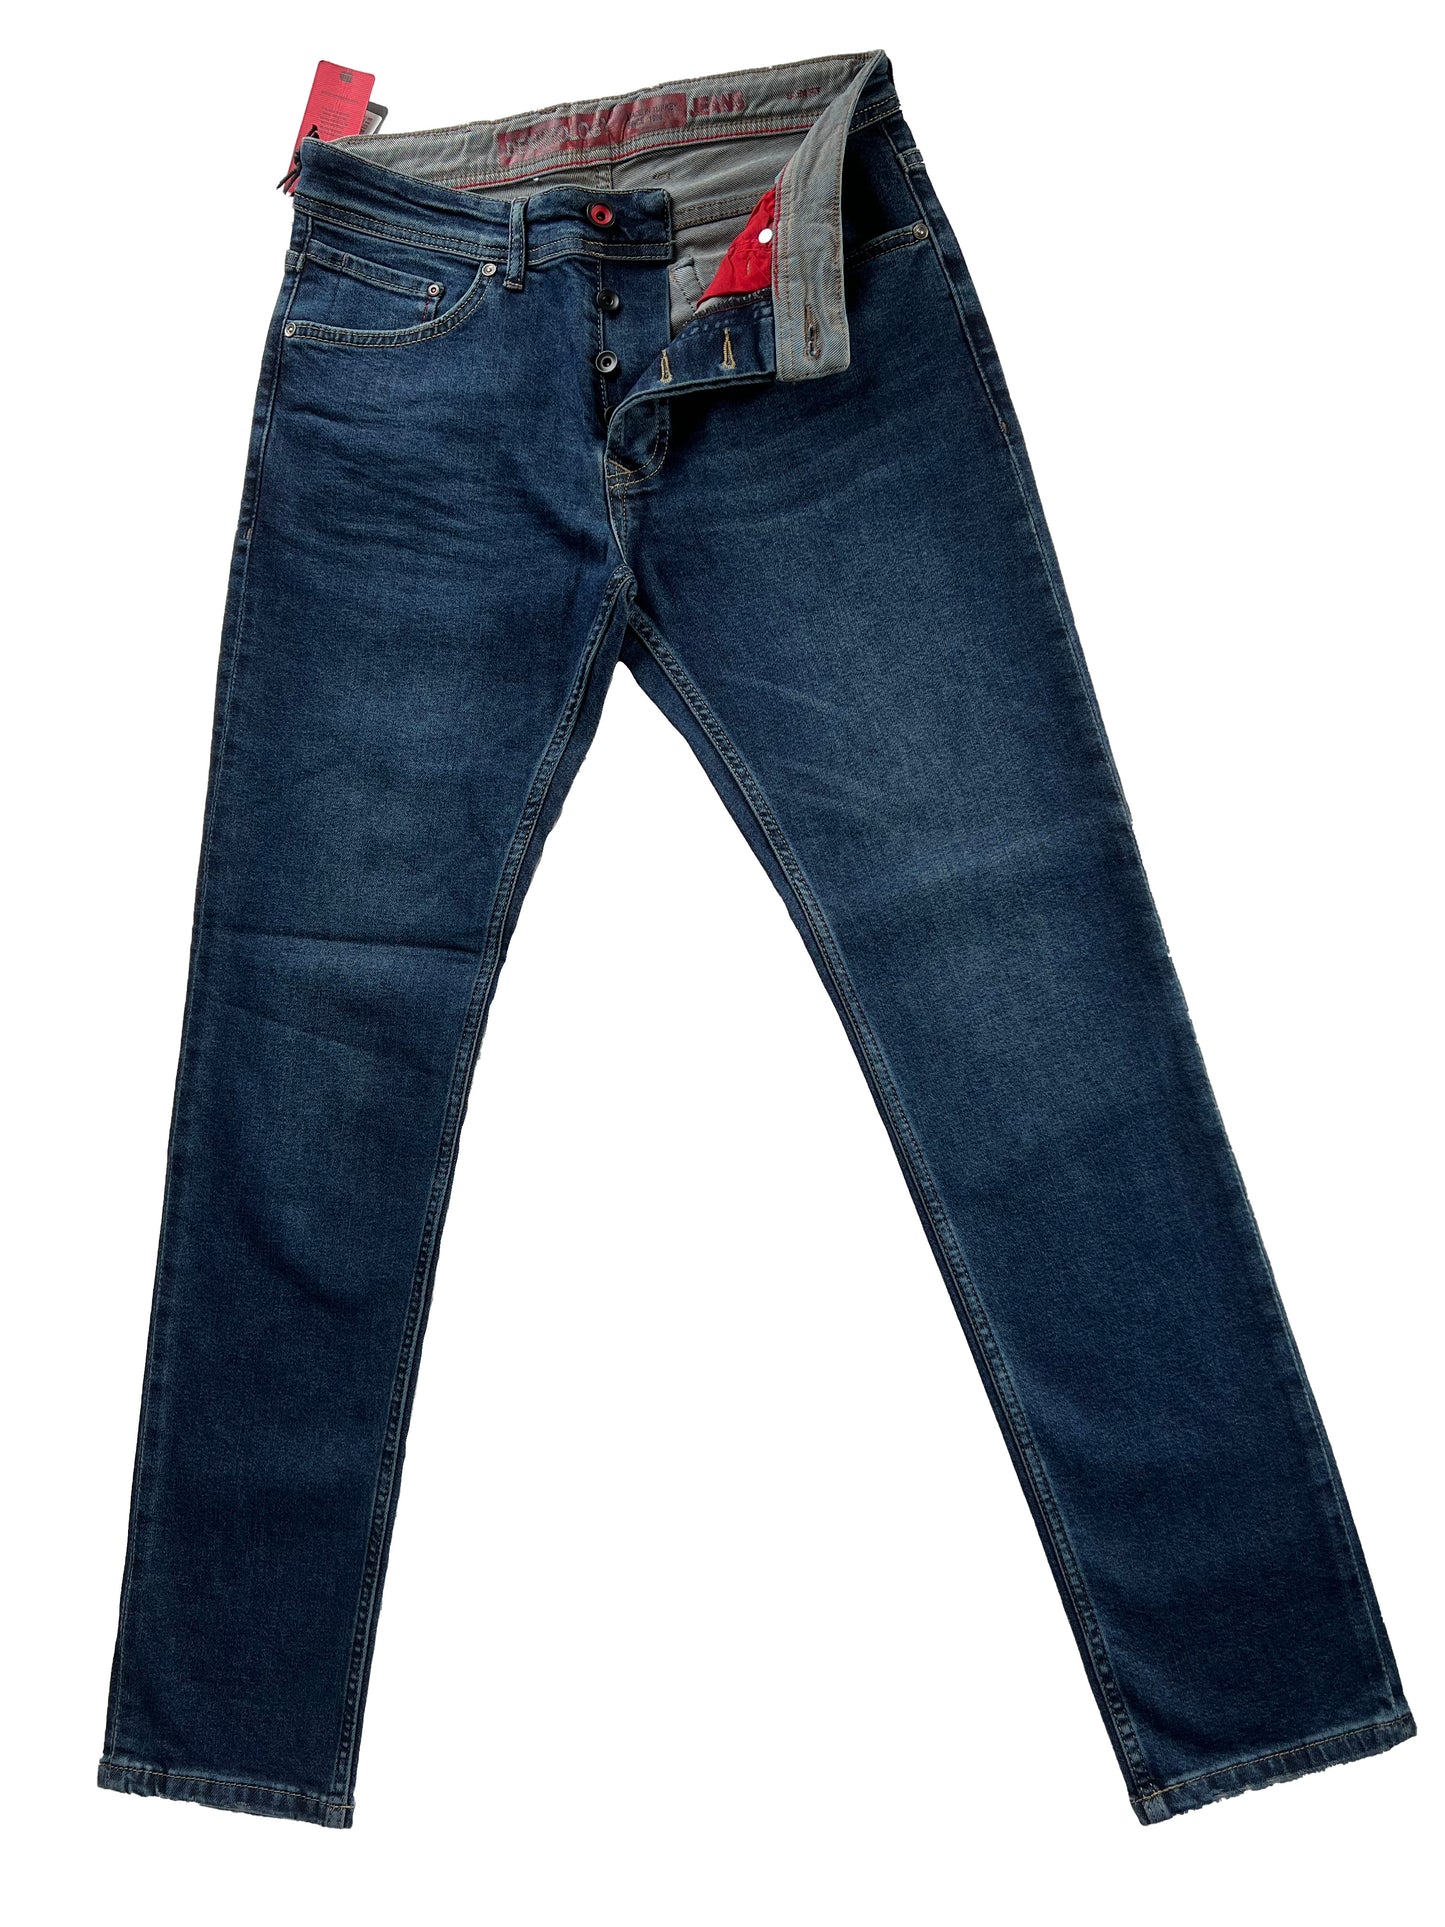 Men's Slim Fit Comfortable Jeans, Trousers- Chorley